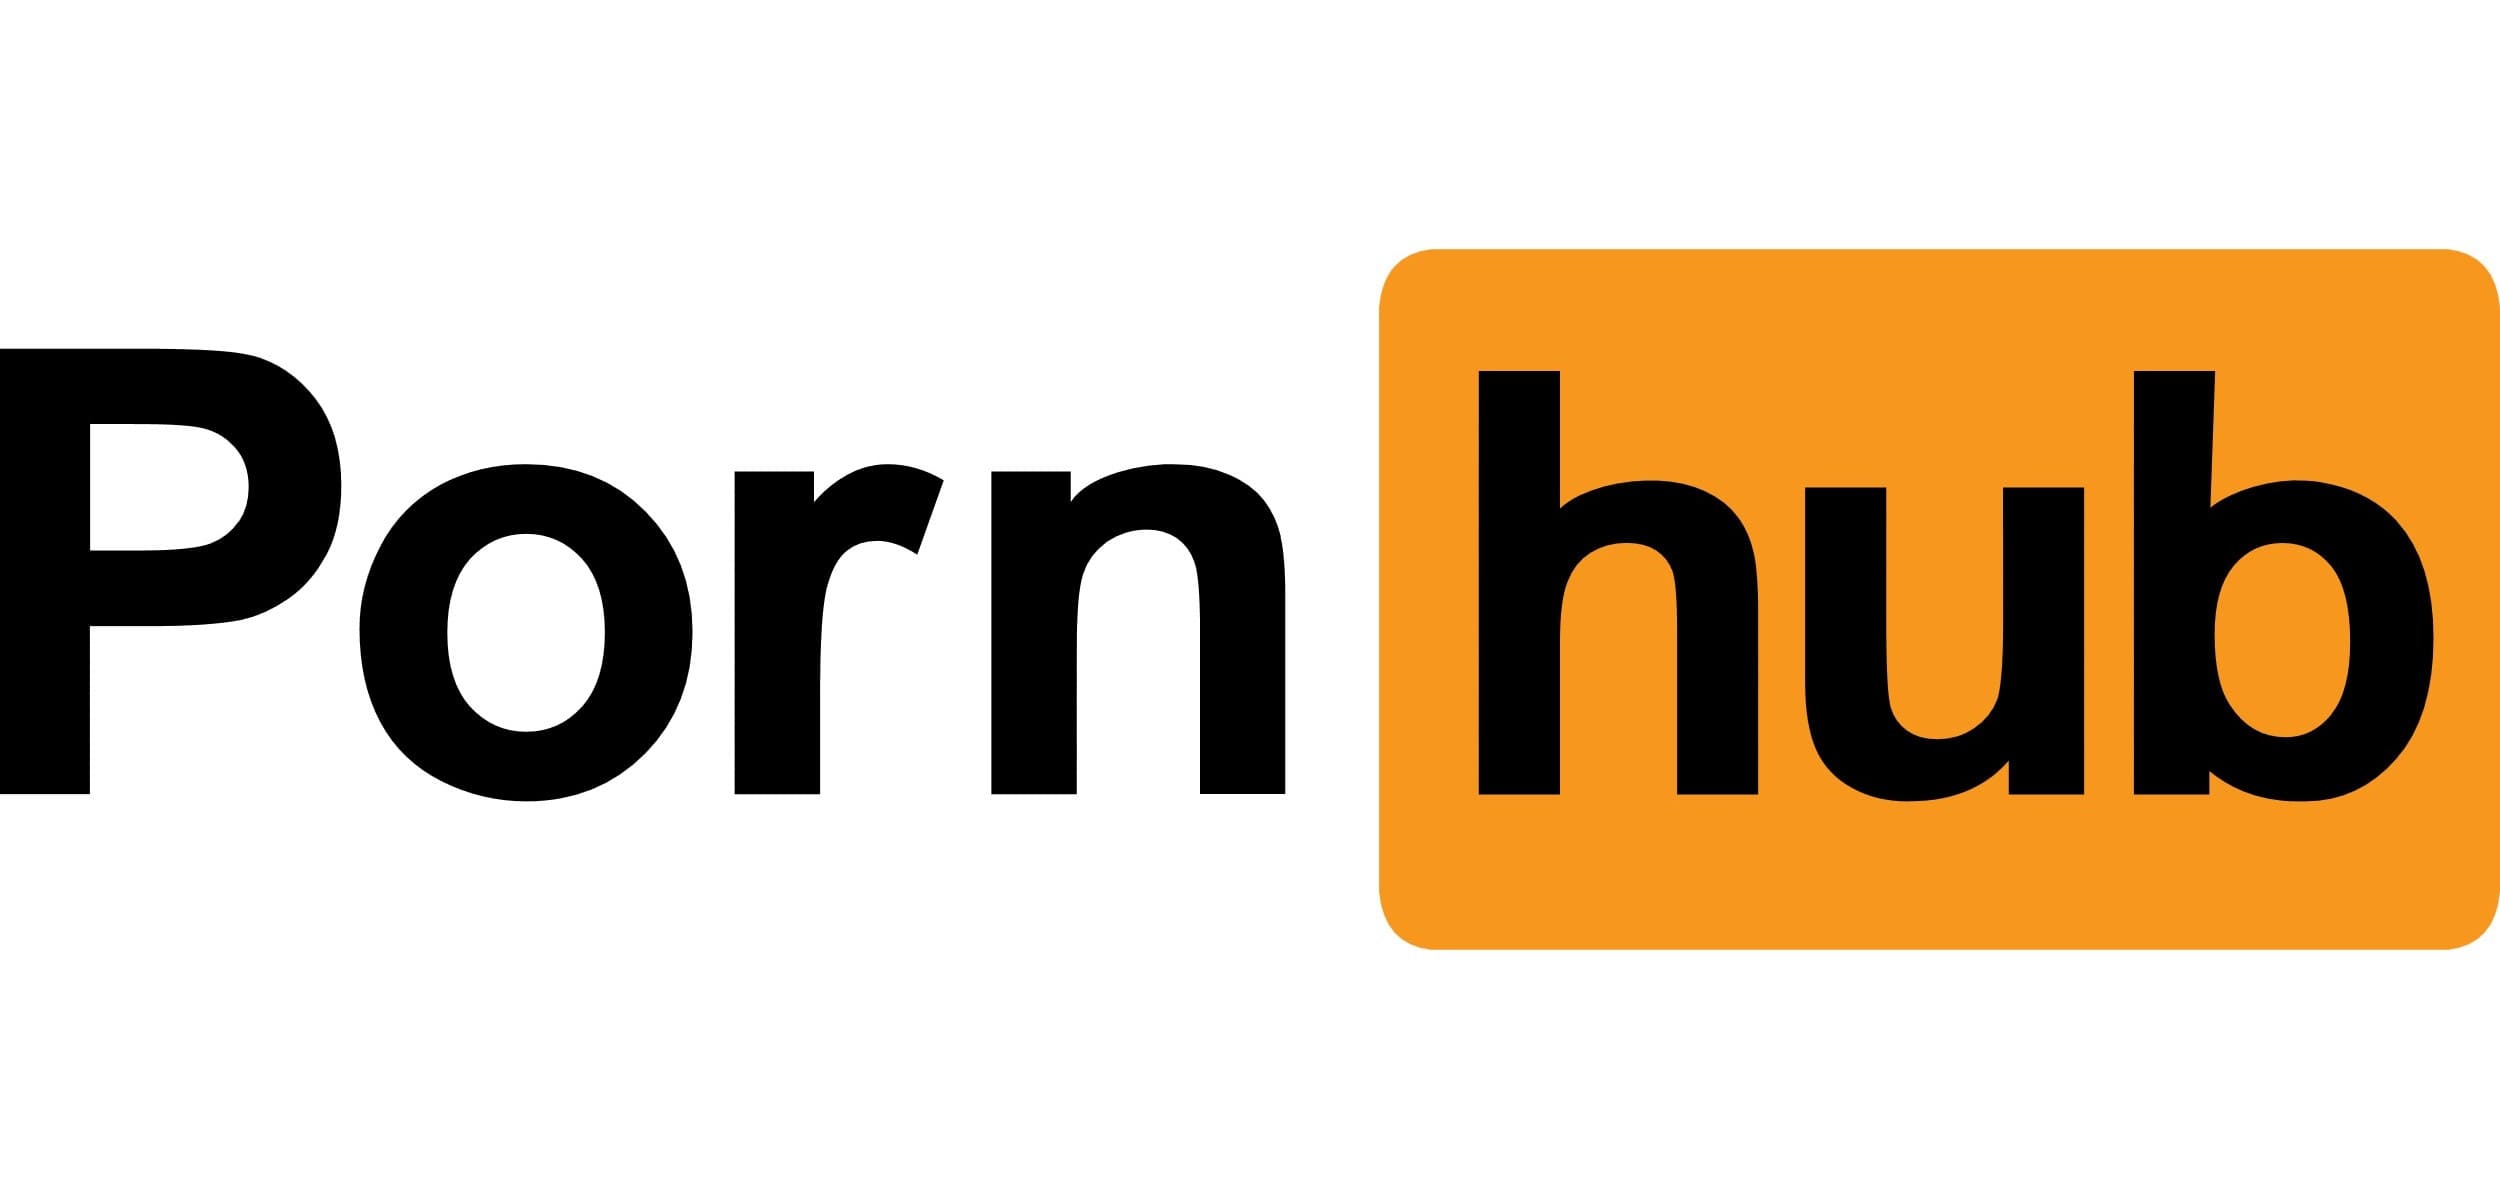 bartholomew morris recommends pornhub hd video download pic